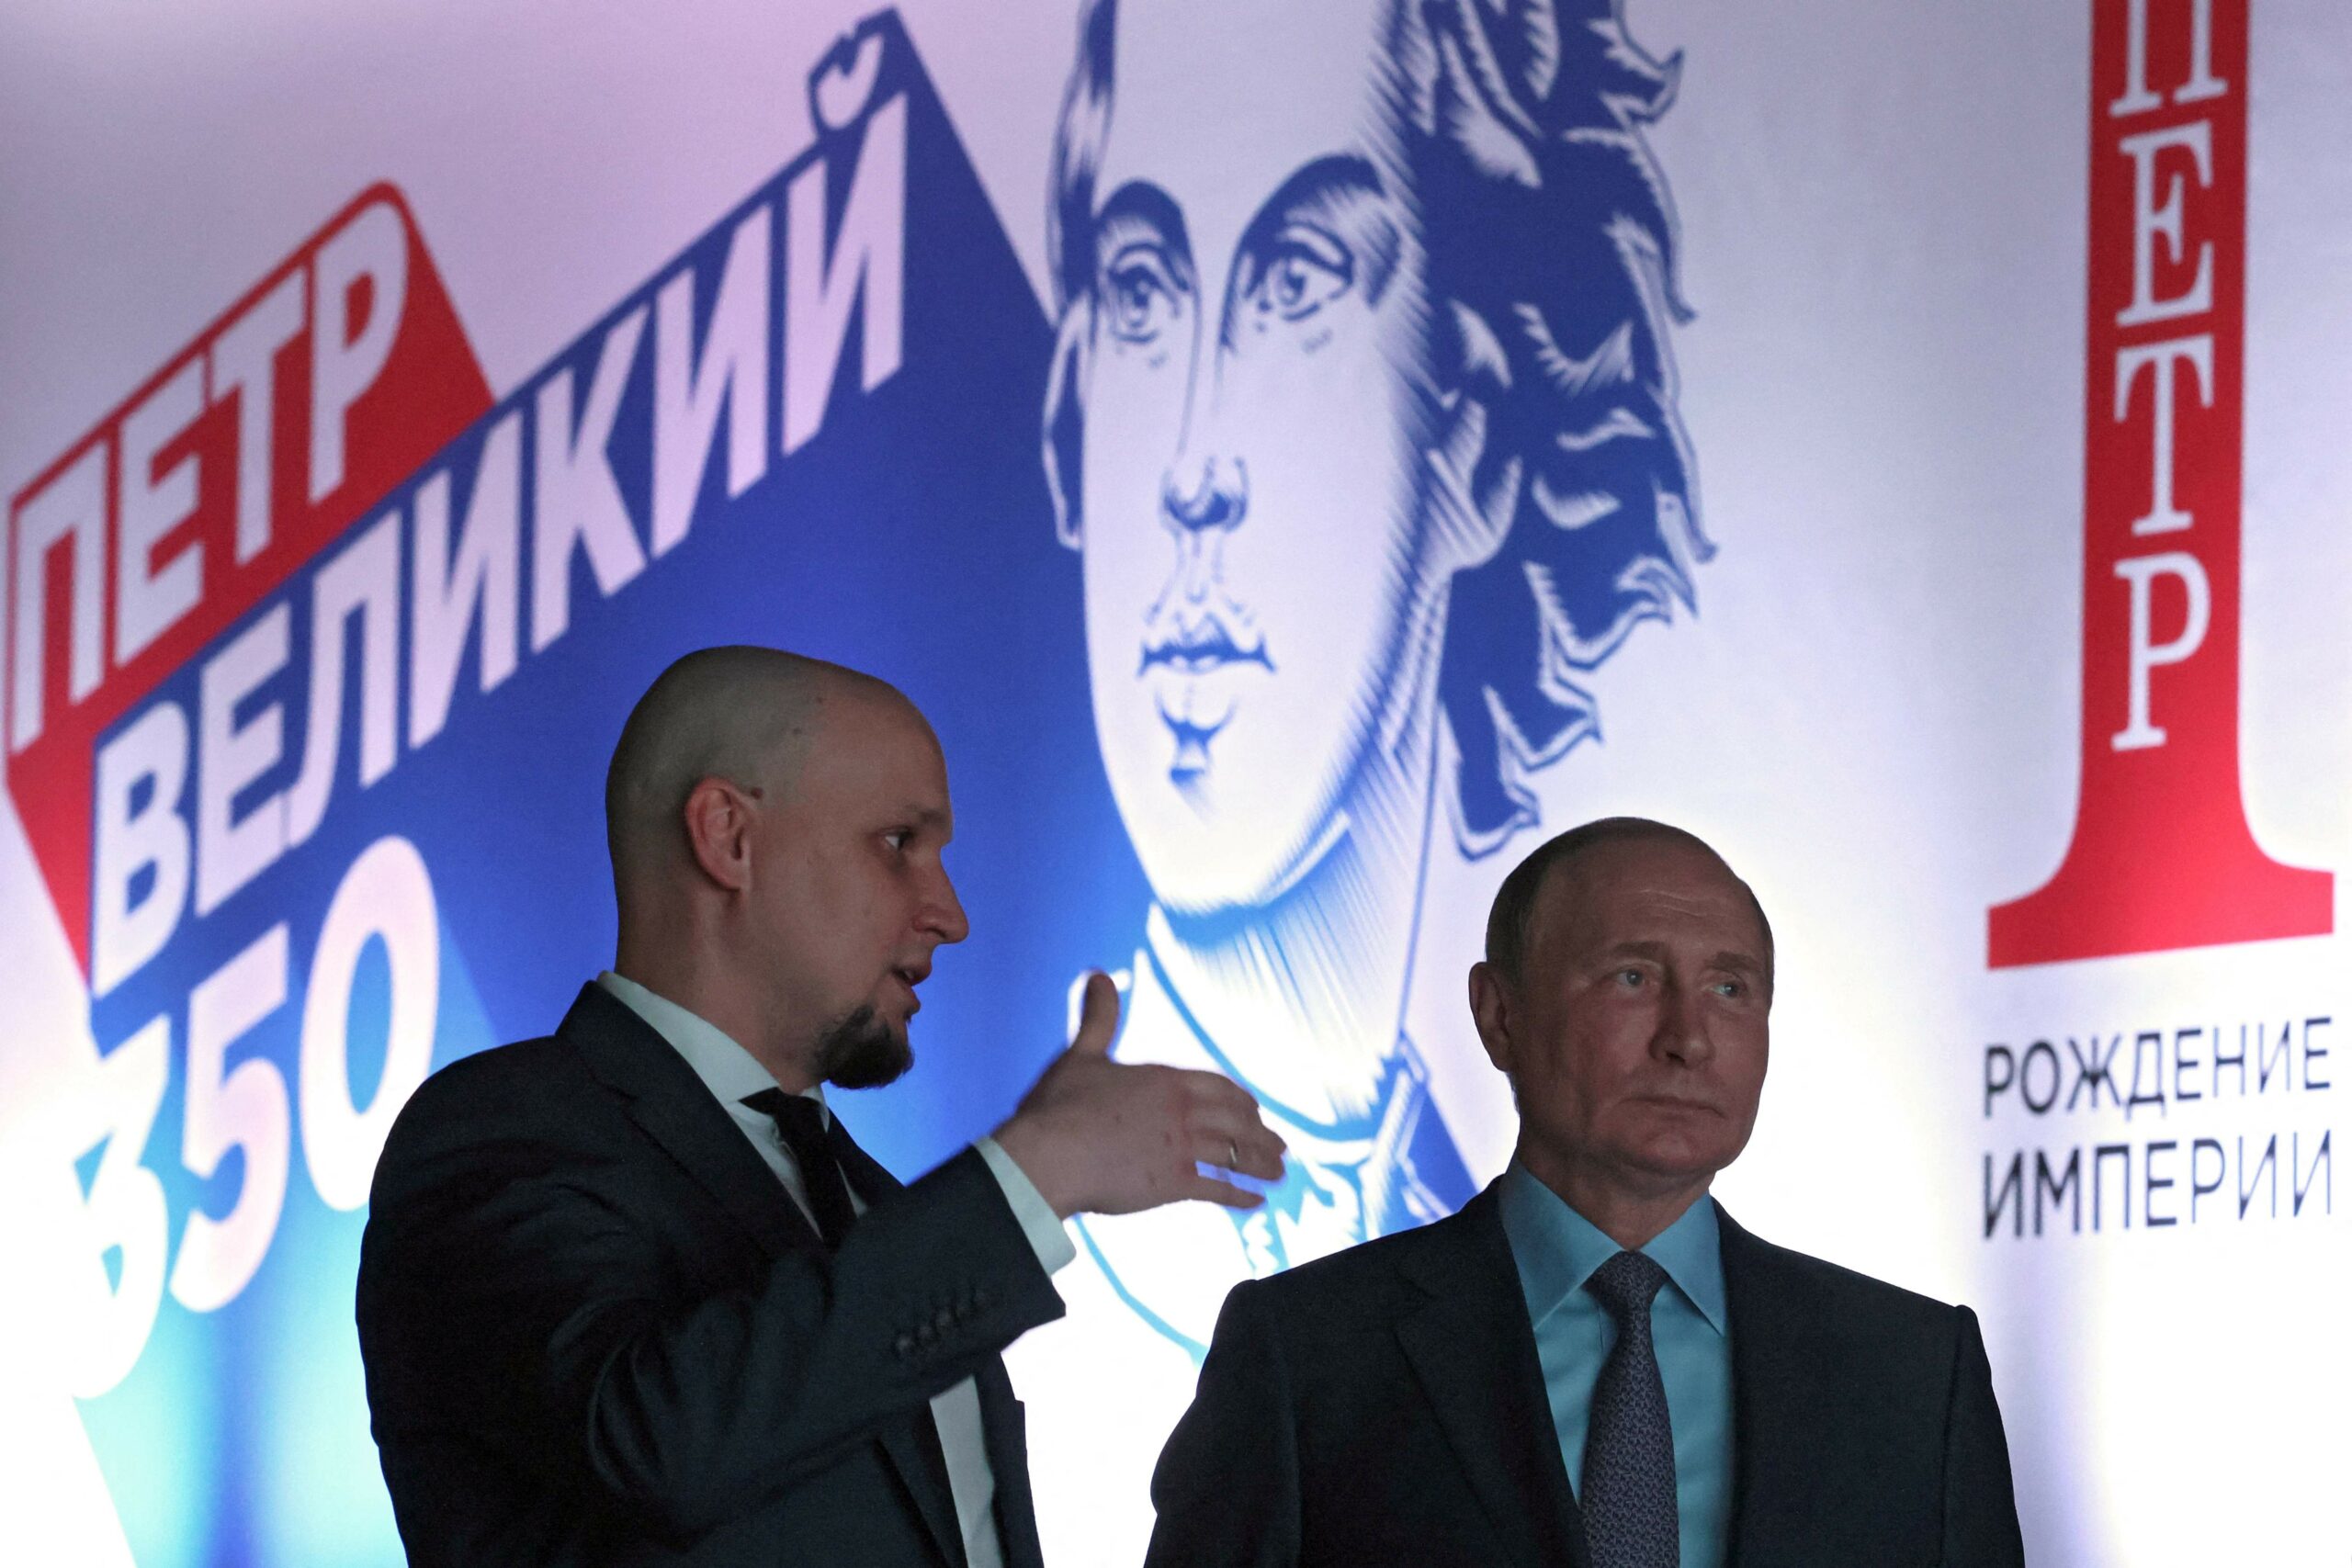 Владимир Путин во время визита на выставку, посвященную 350-летию Петра I. 9 июня 2022 года. Фото EPA/MIKHAIL METZEL/KREMLIN POOL/Scanpix/LETA